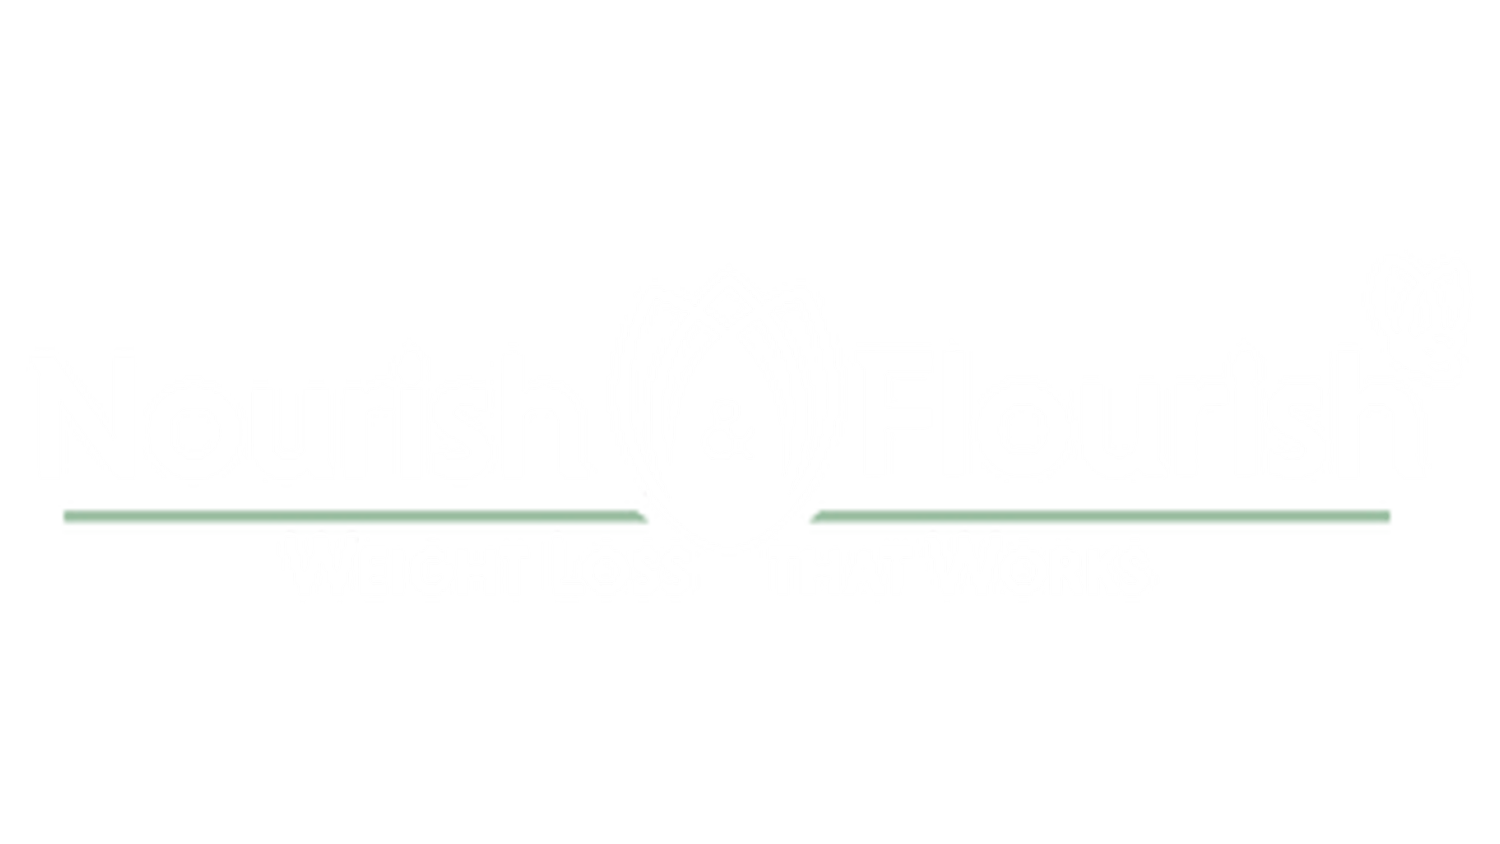 Nourish and Flourish